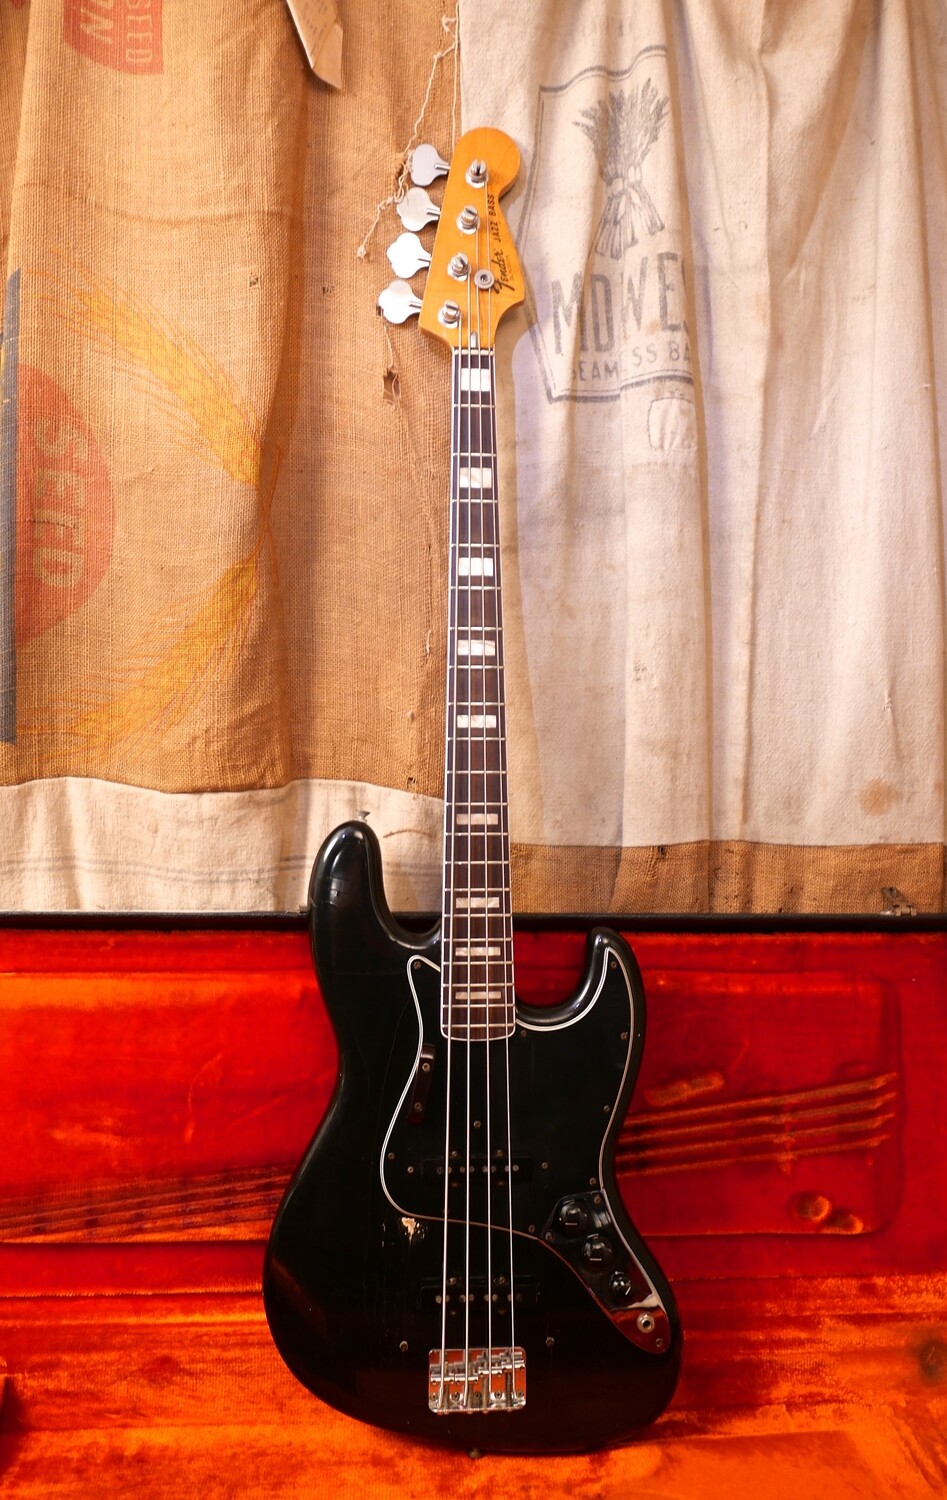 1976 Fender Jazz Bass Black